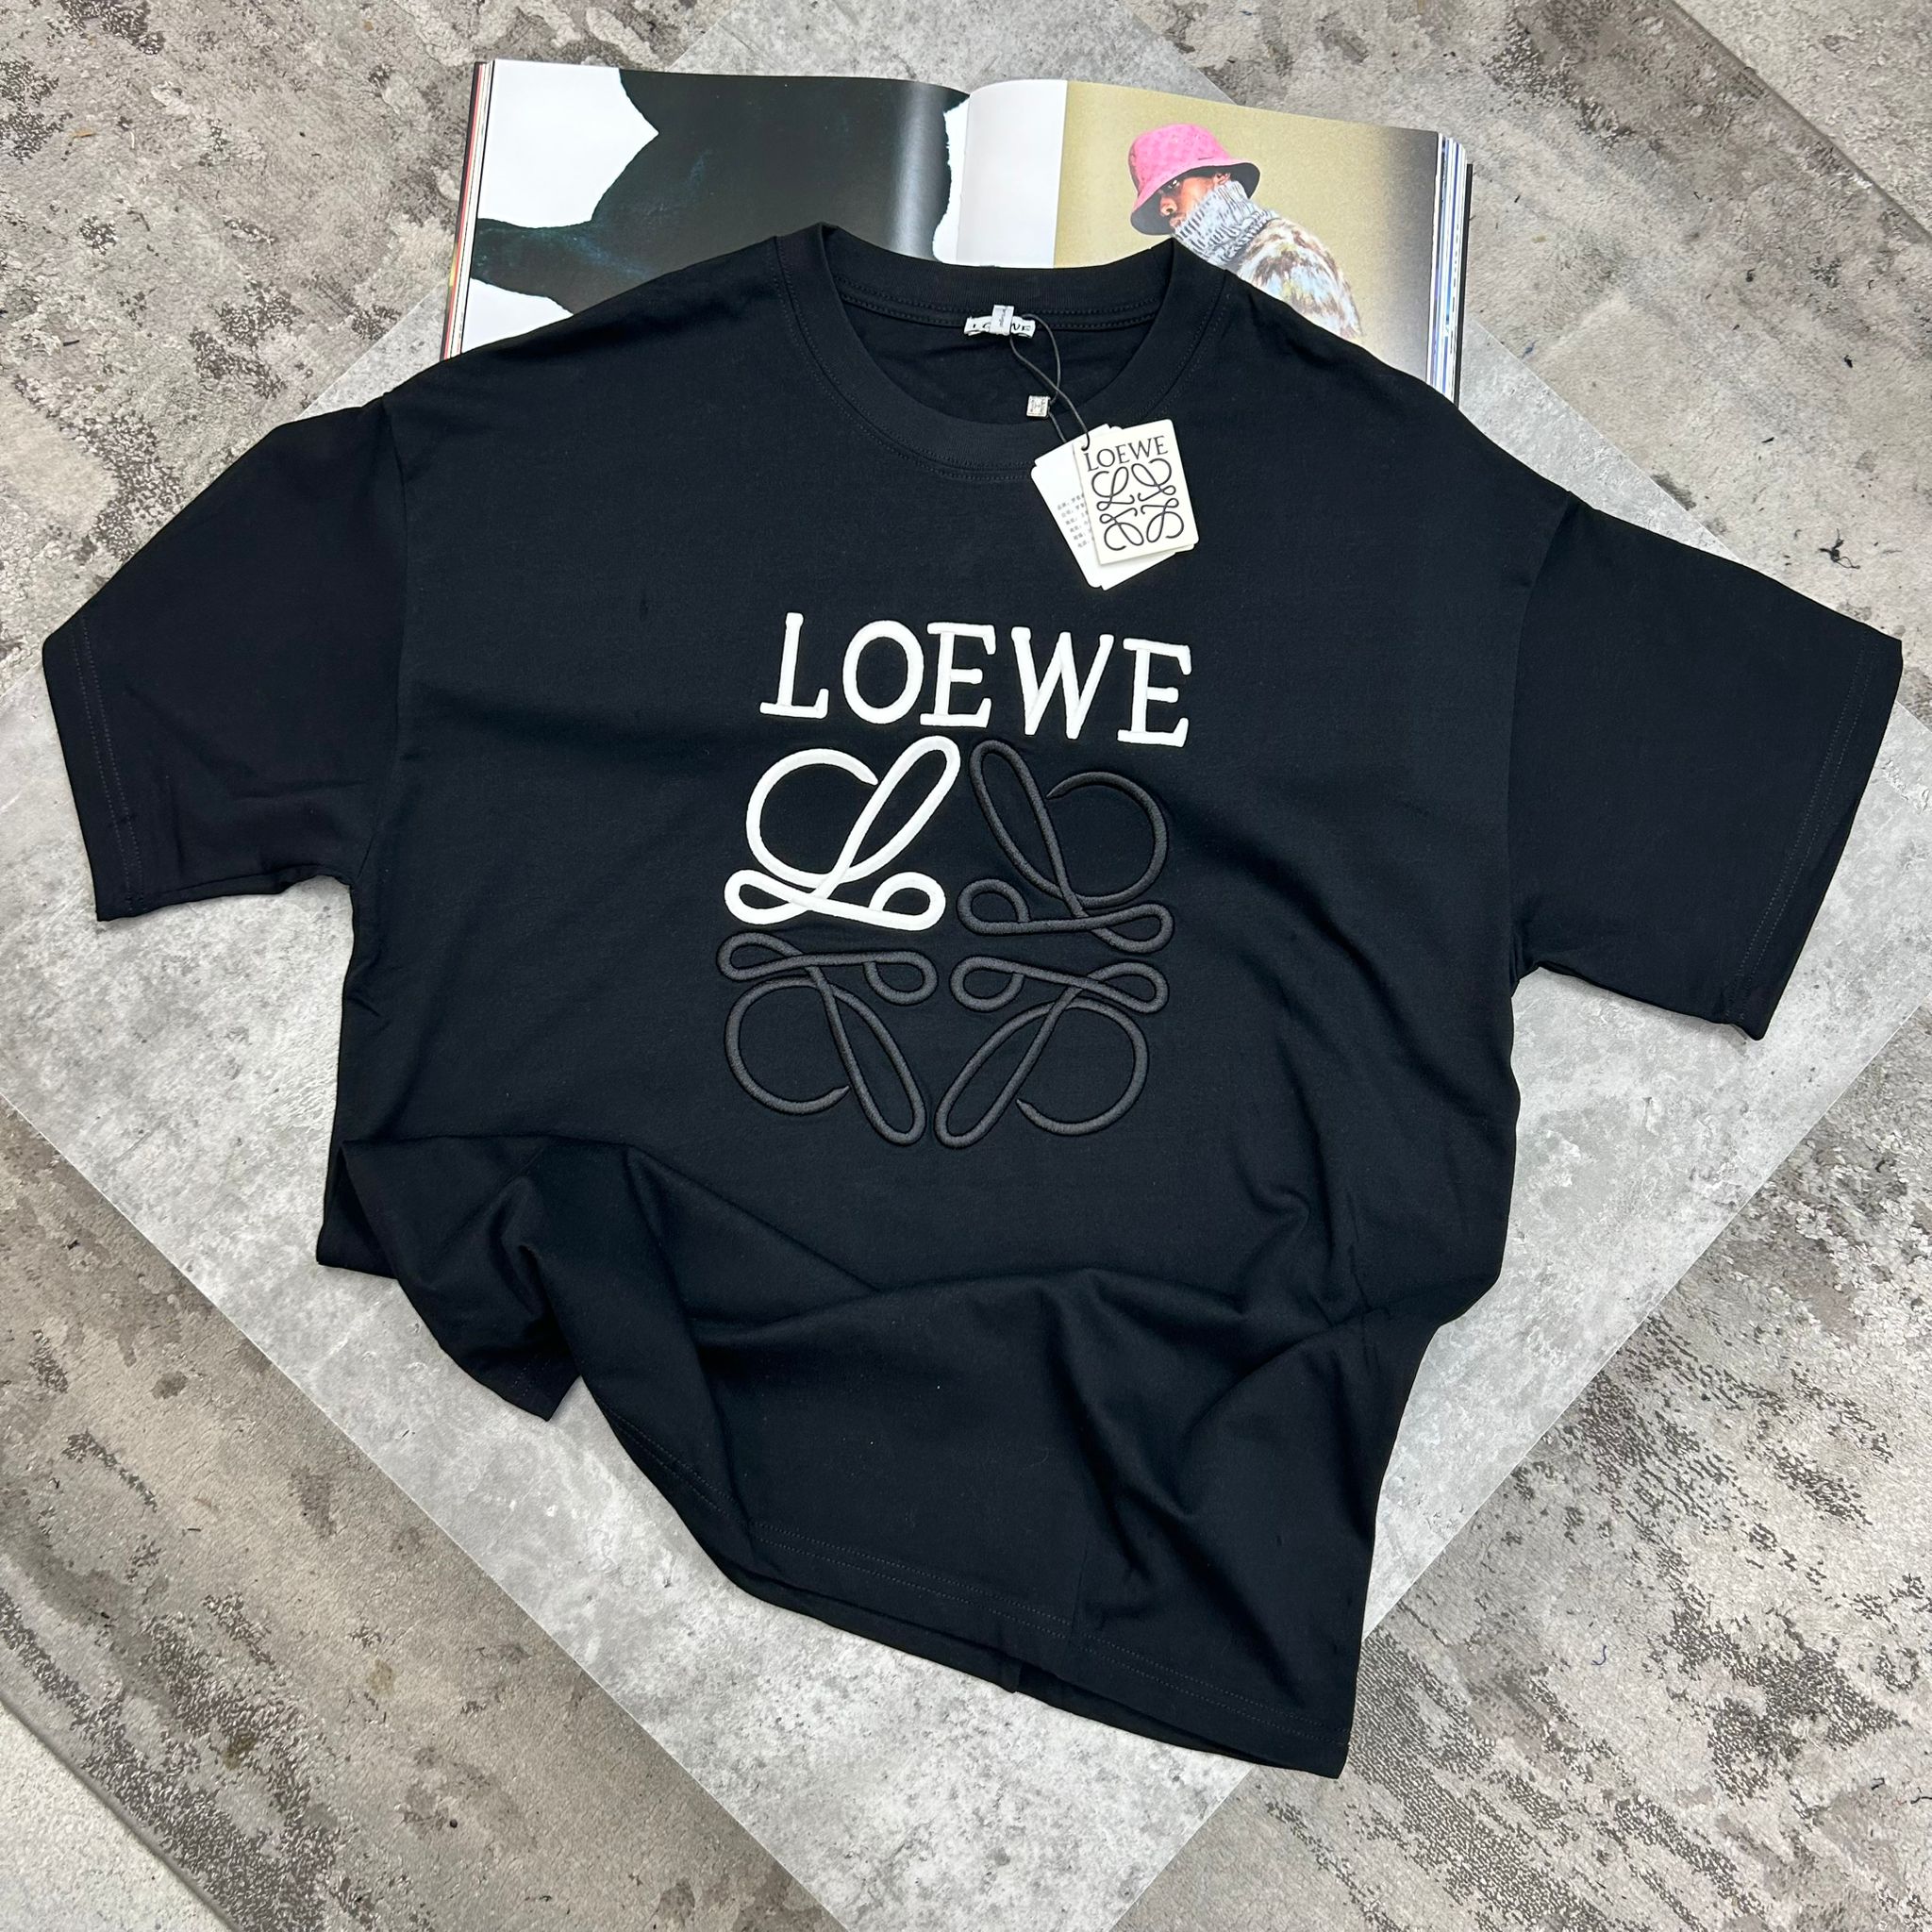 LOEWE - BIG LOGO OVERSIZED T-SHIRT - BLACK/WHITE